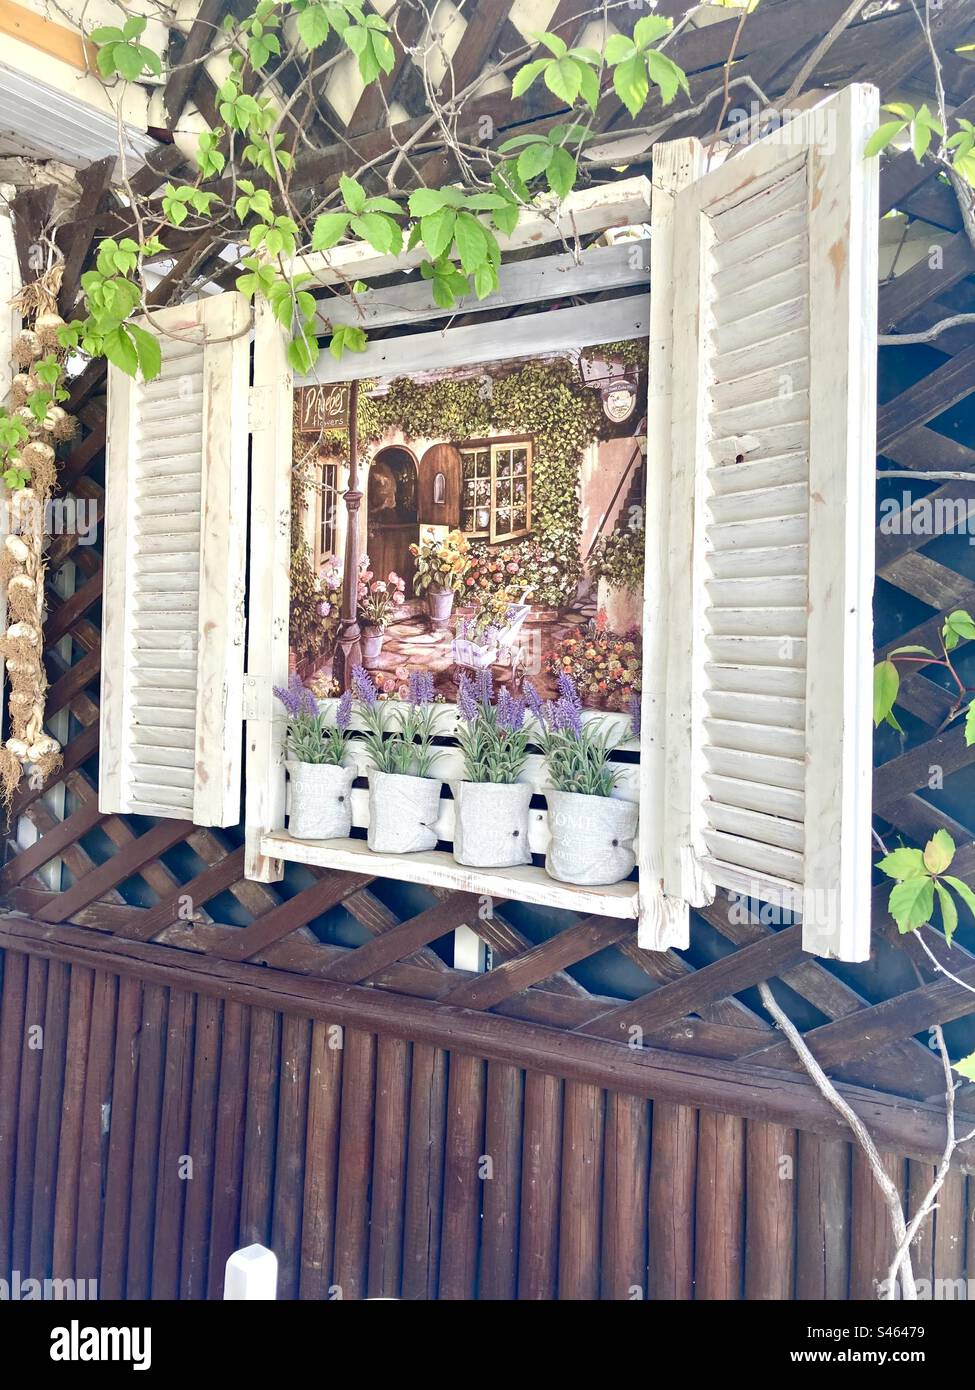 Greece taverna garden display Stock Photo